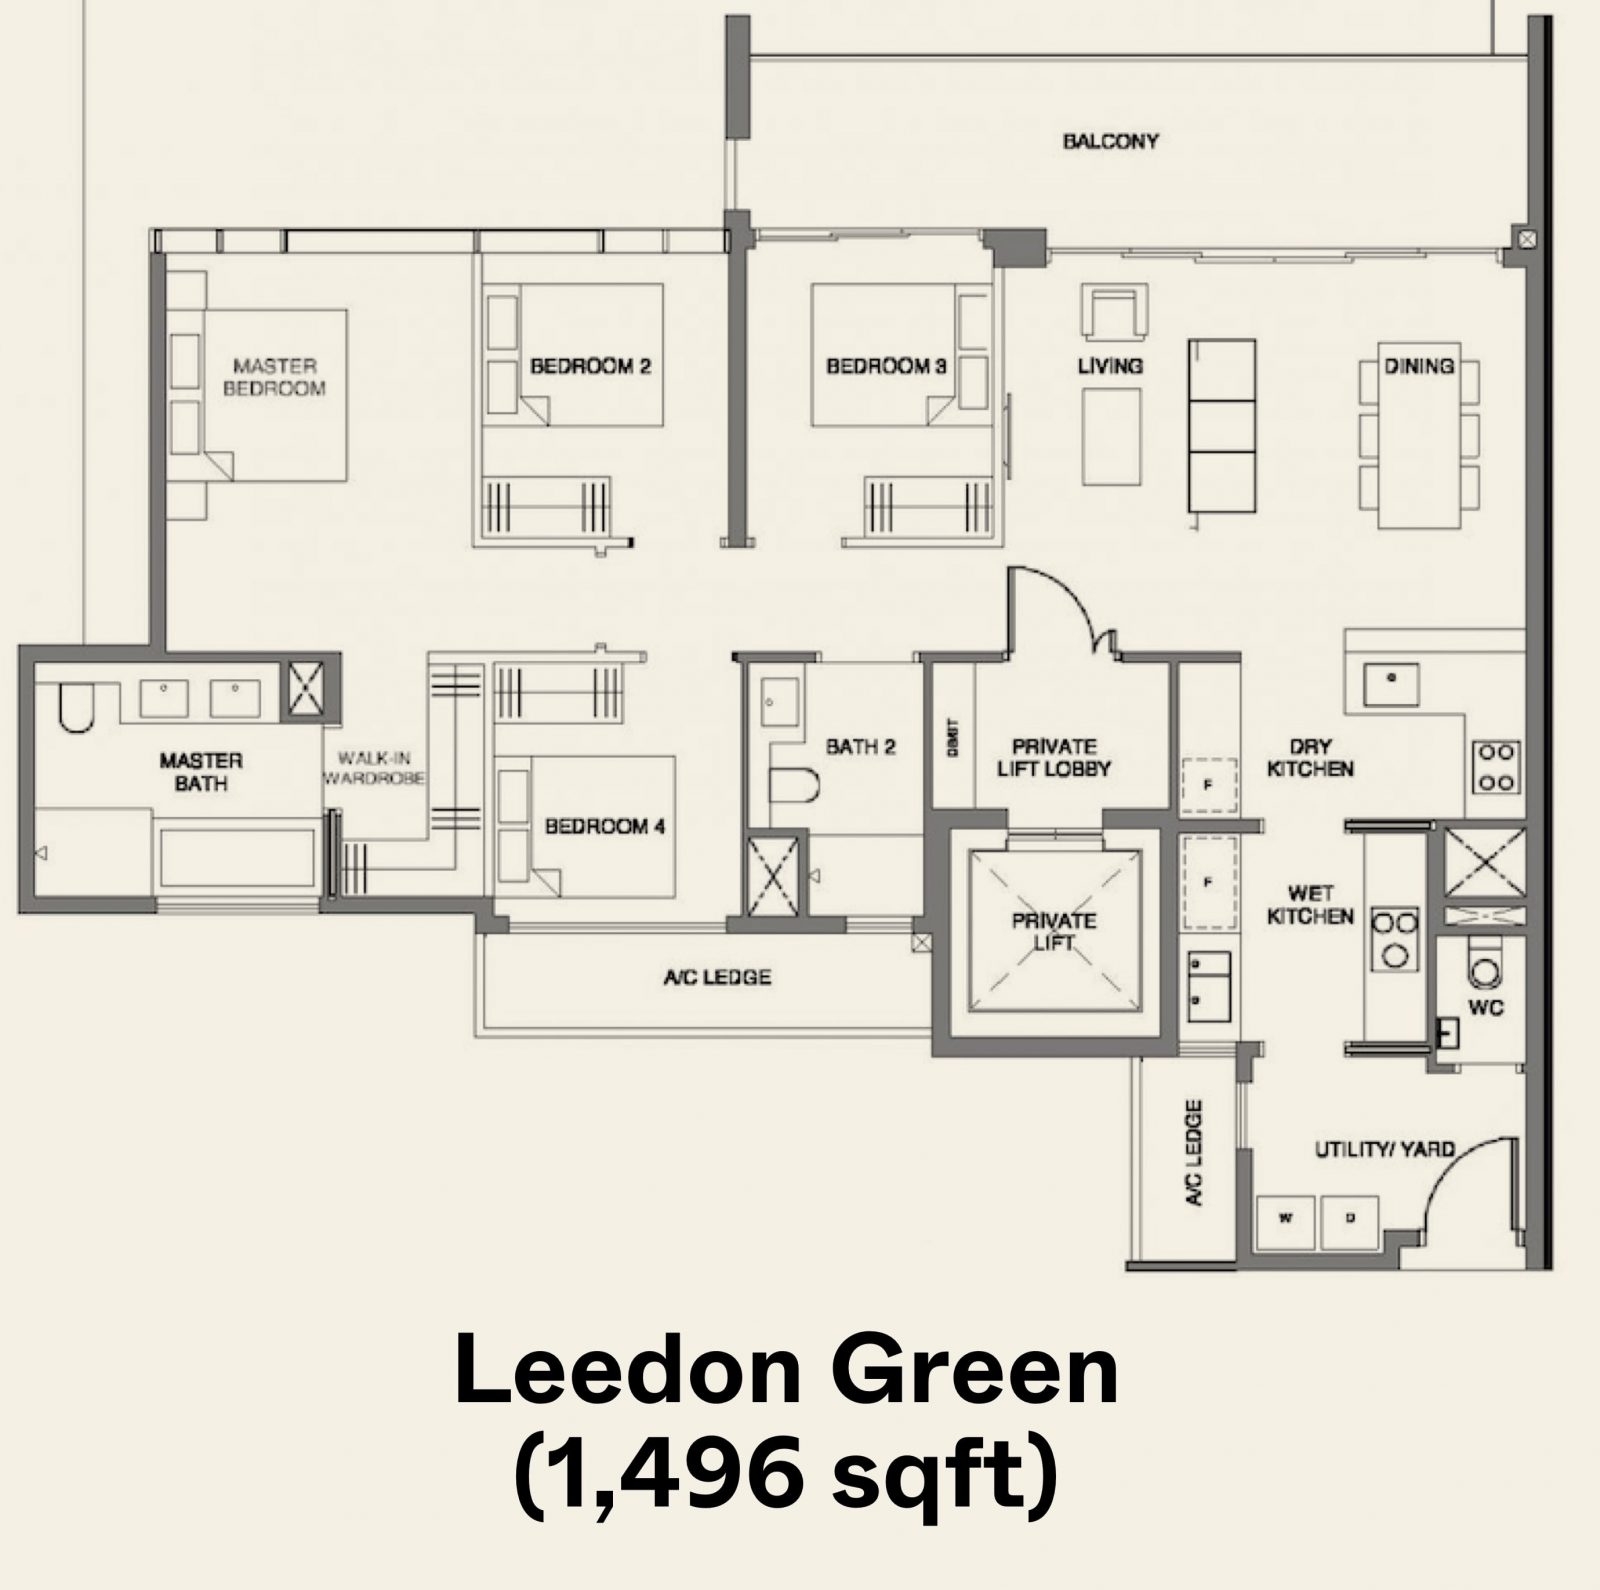 4 bedroom Leedon Green